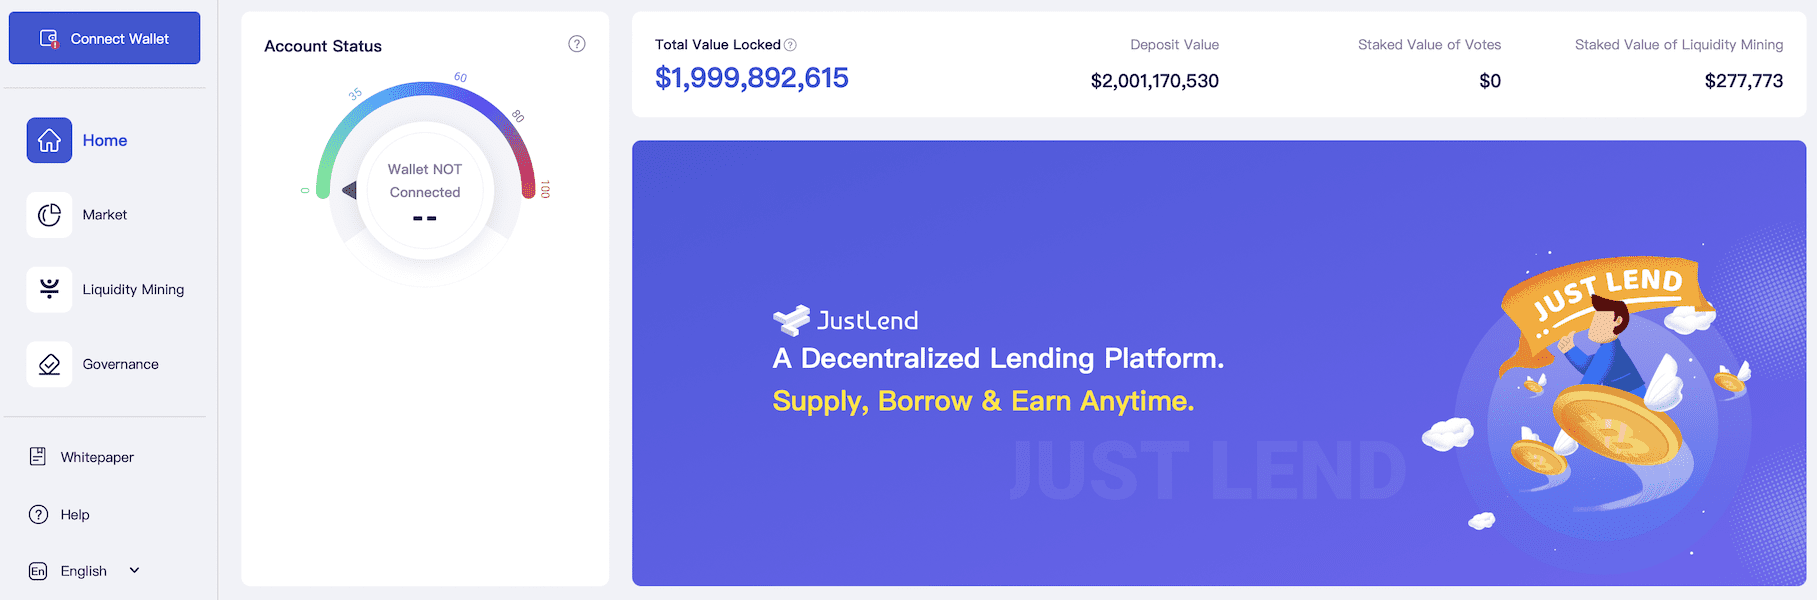 justlend defi lending platform